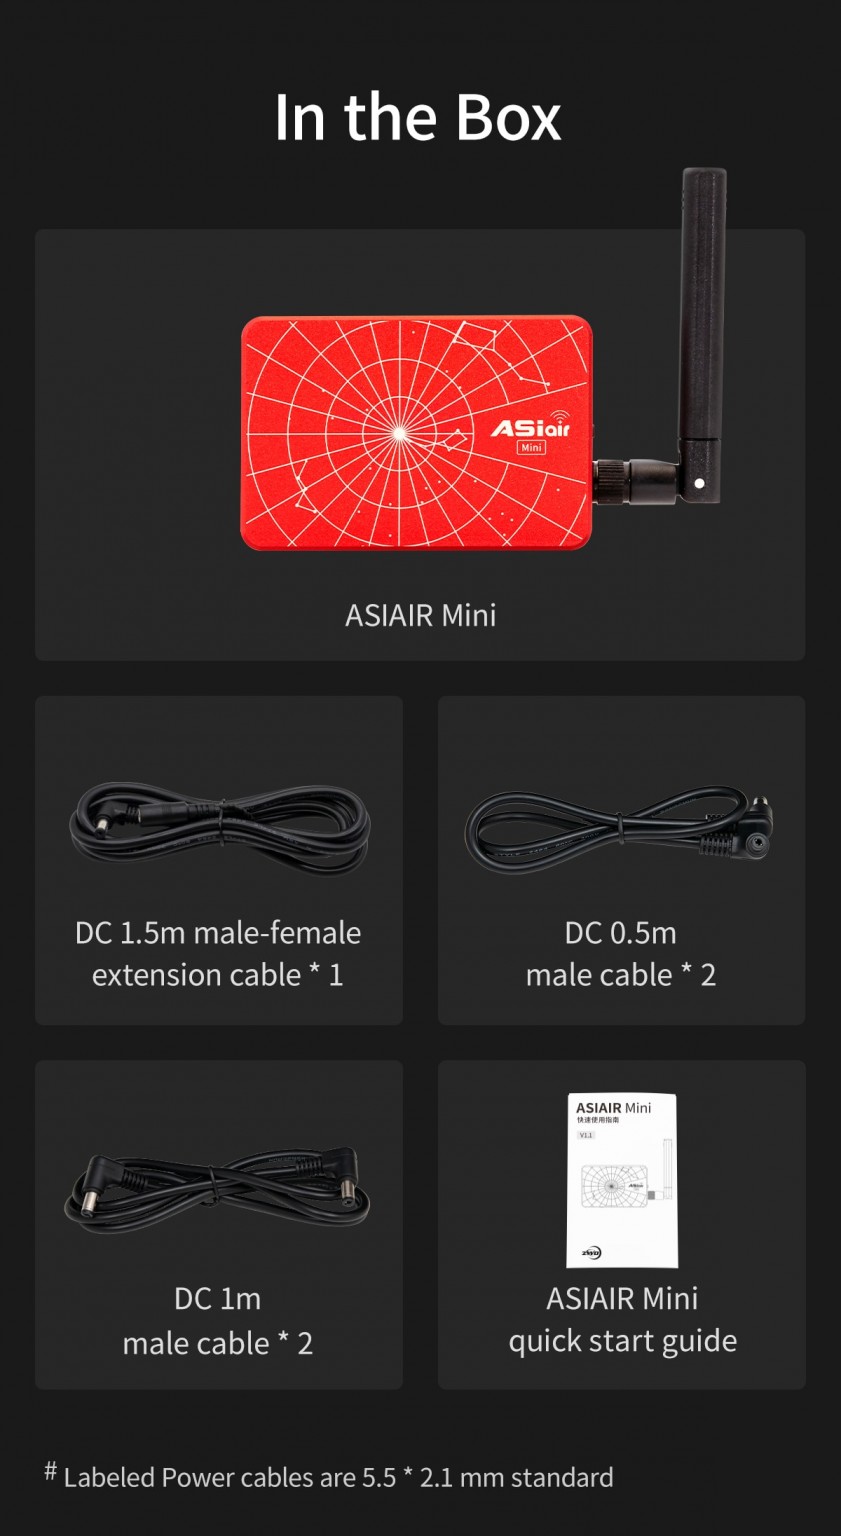 ASIAIR Mini wireless controller